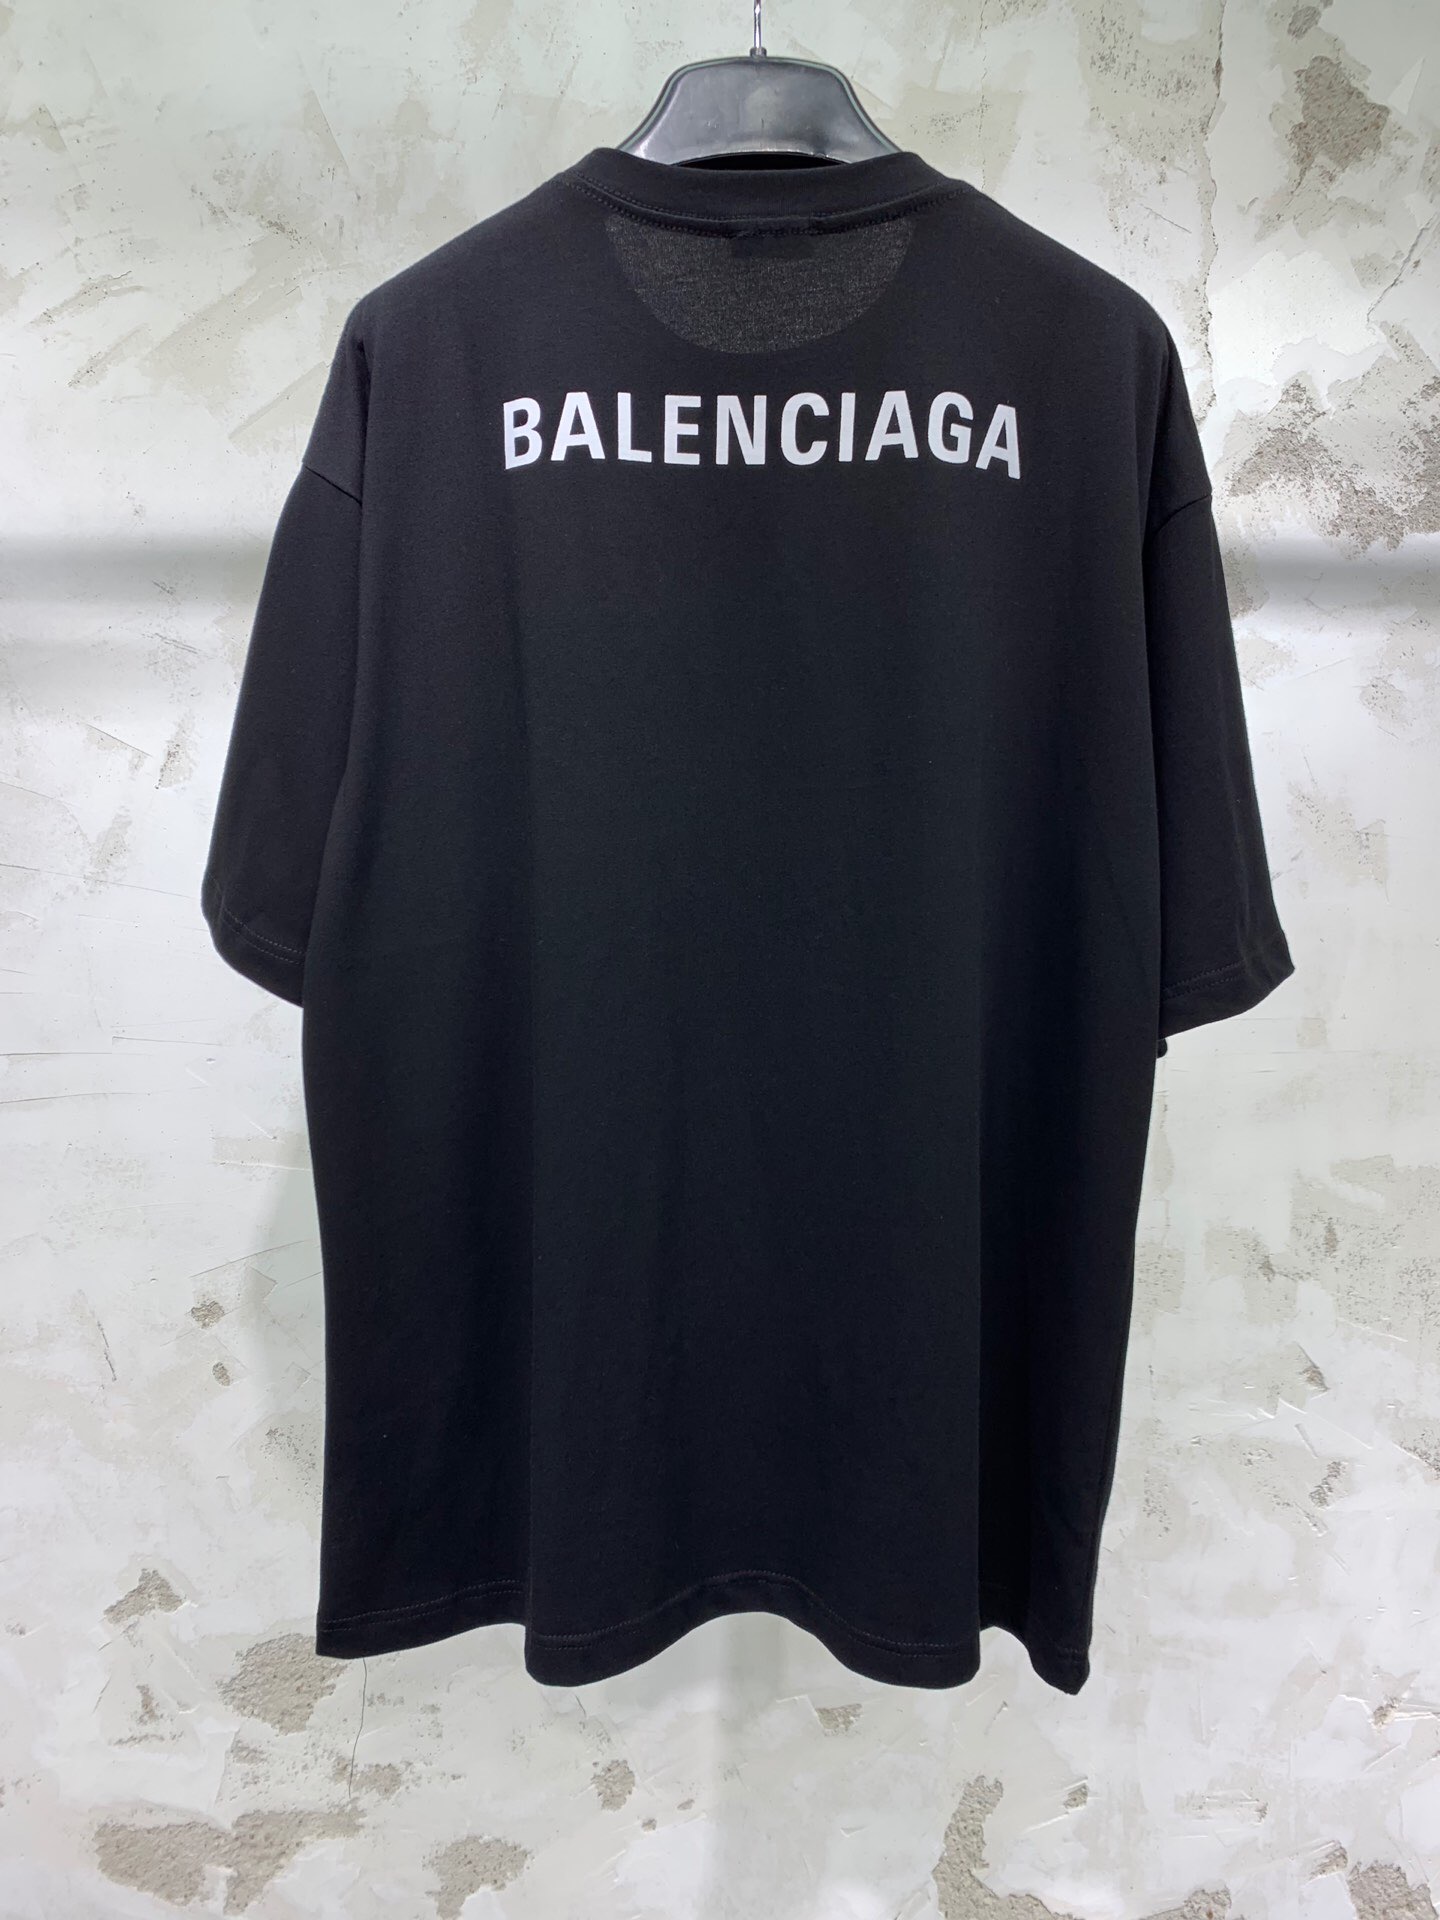 balenciaga t shirt oversized